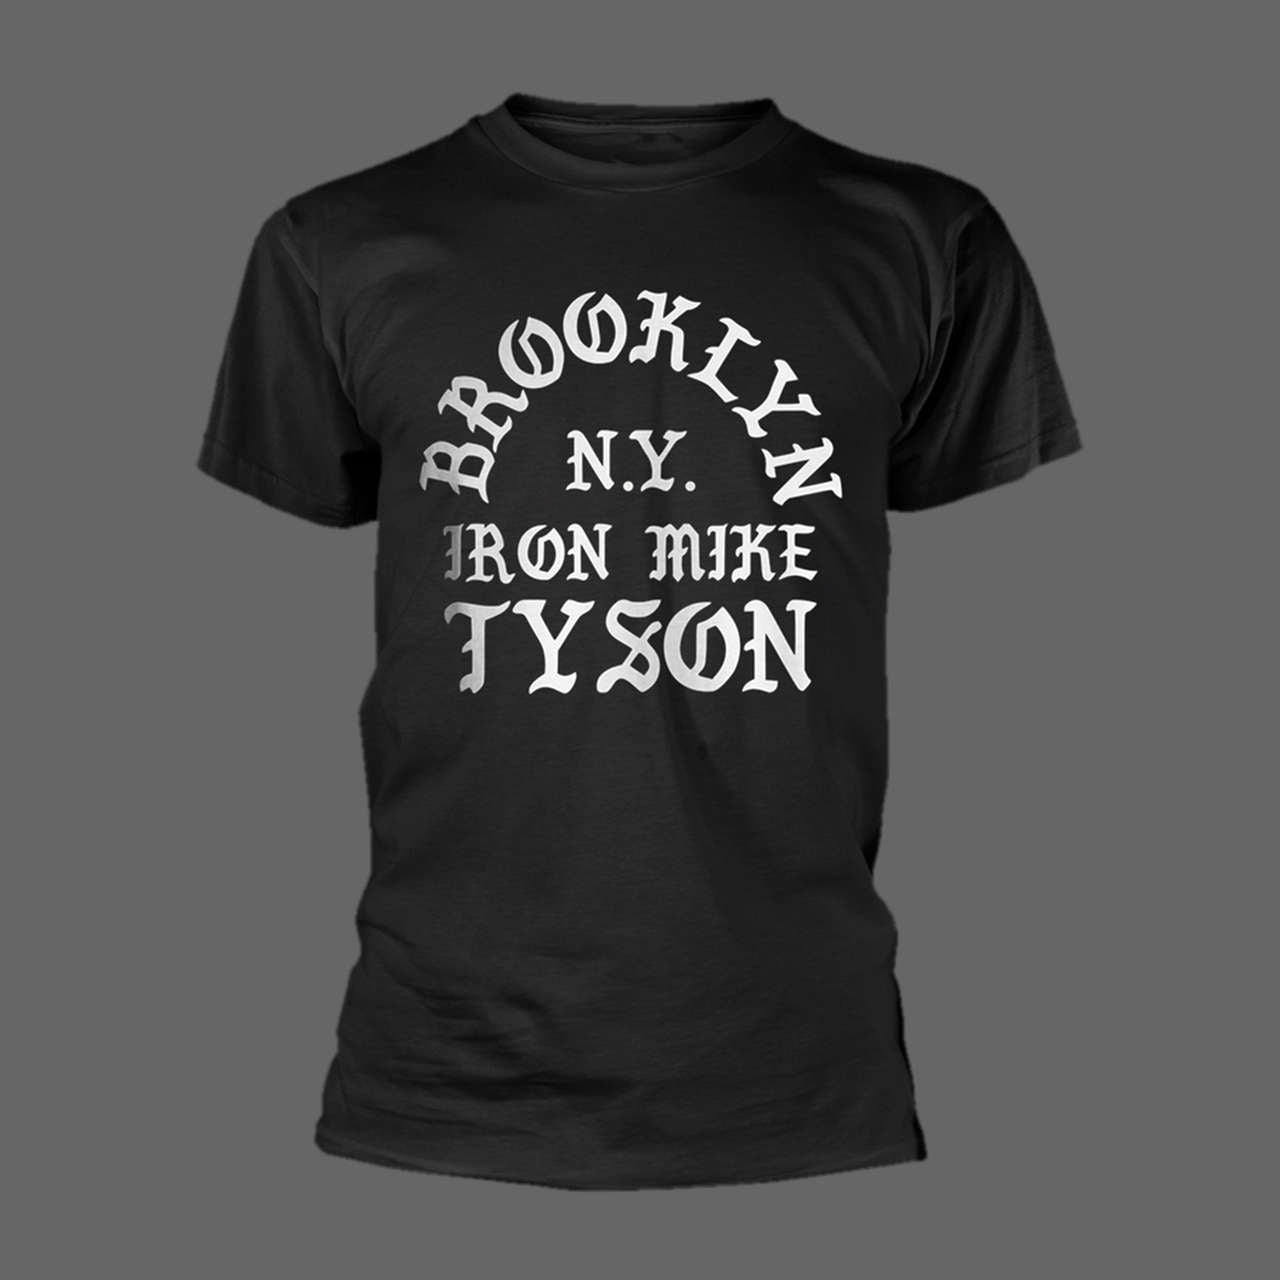 Iron Mike Tyson (T-Shirt)